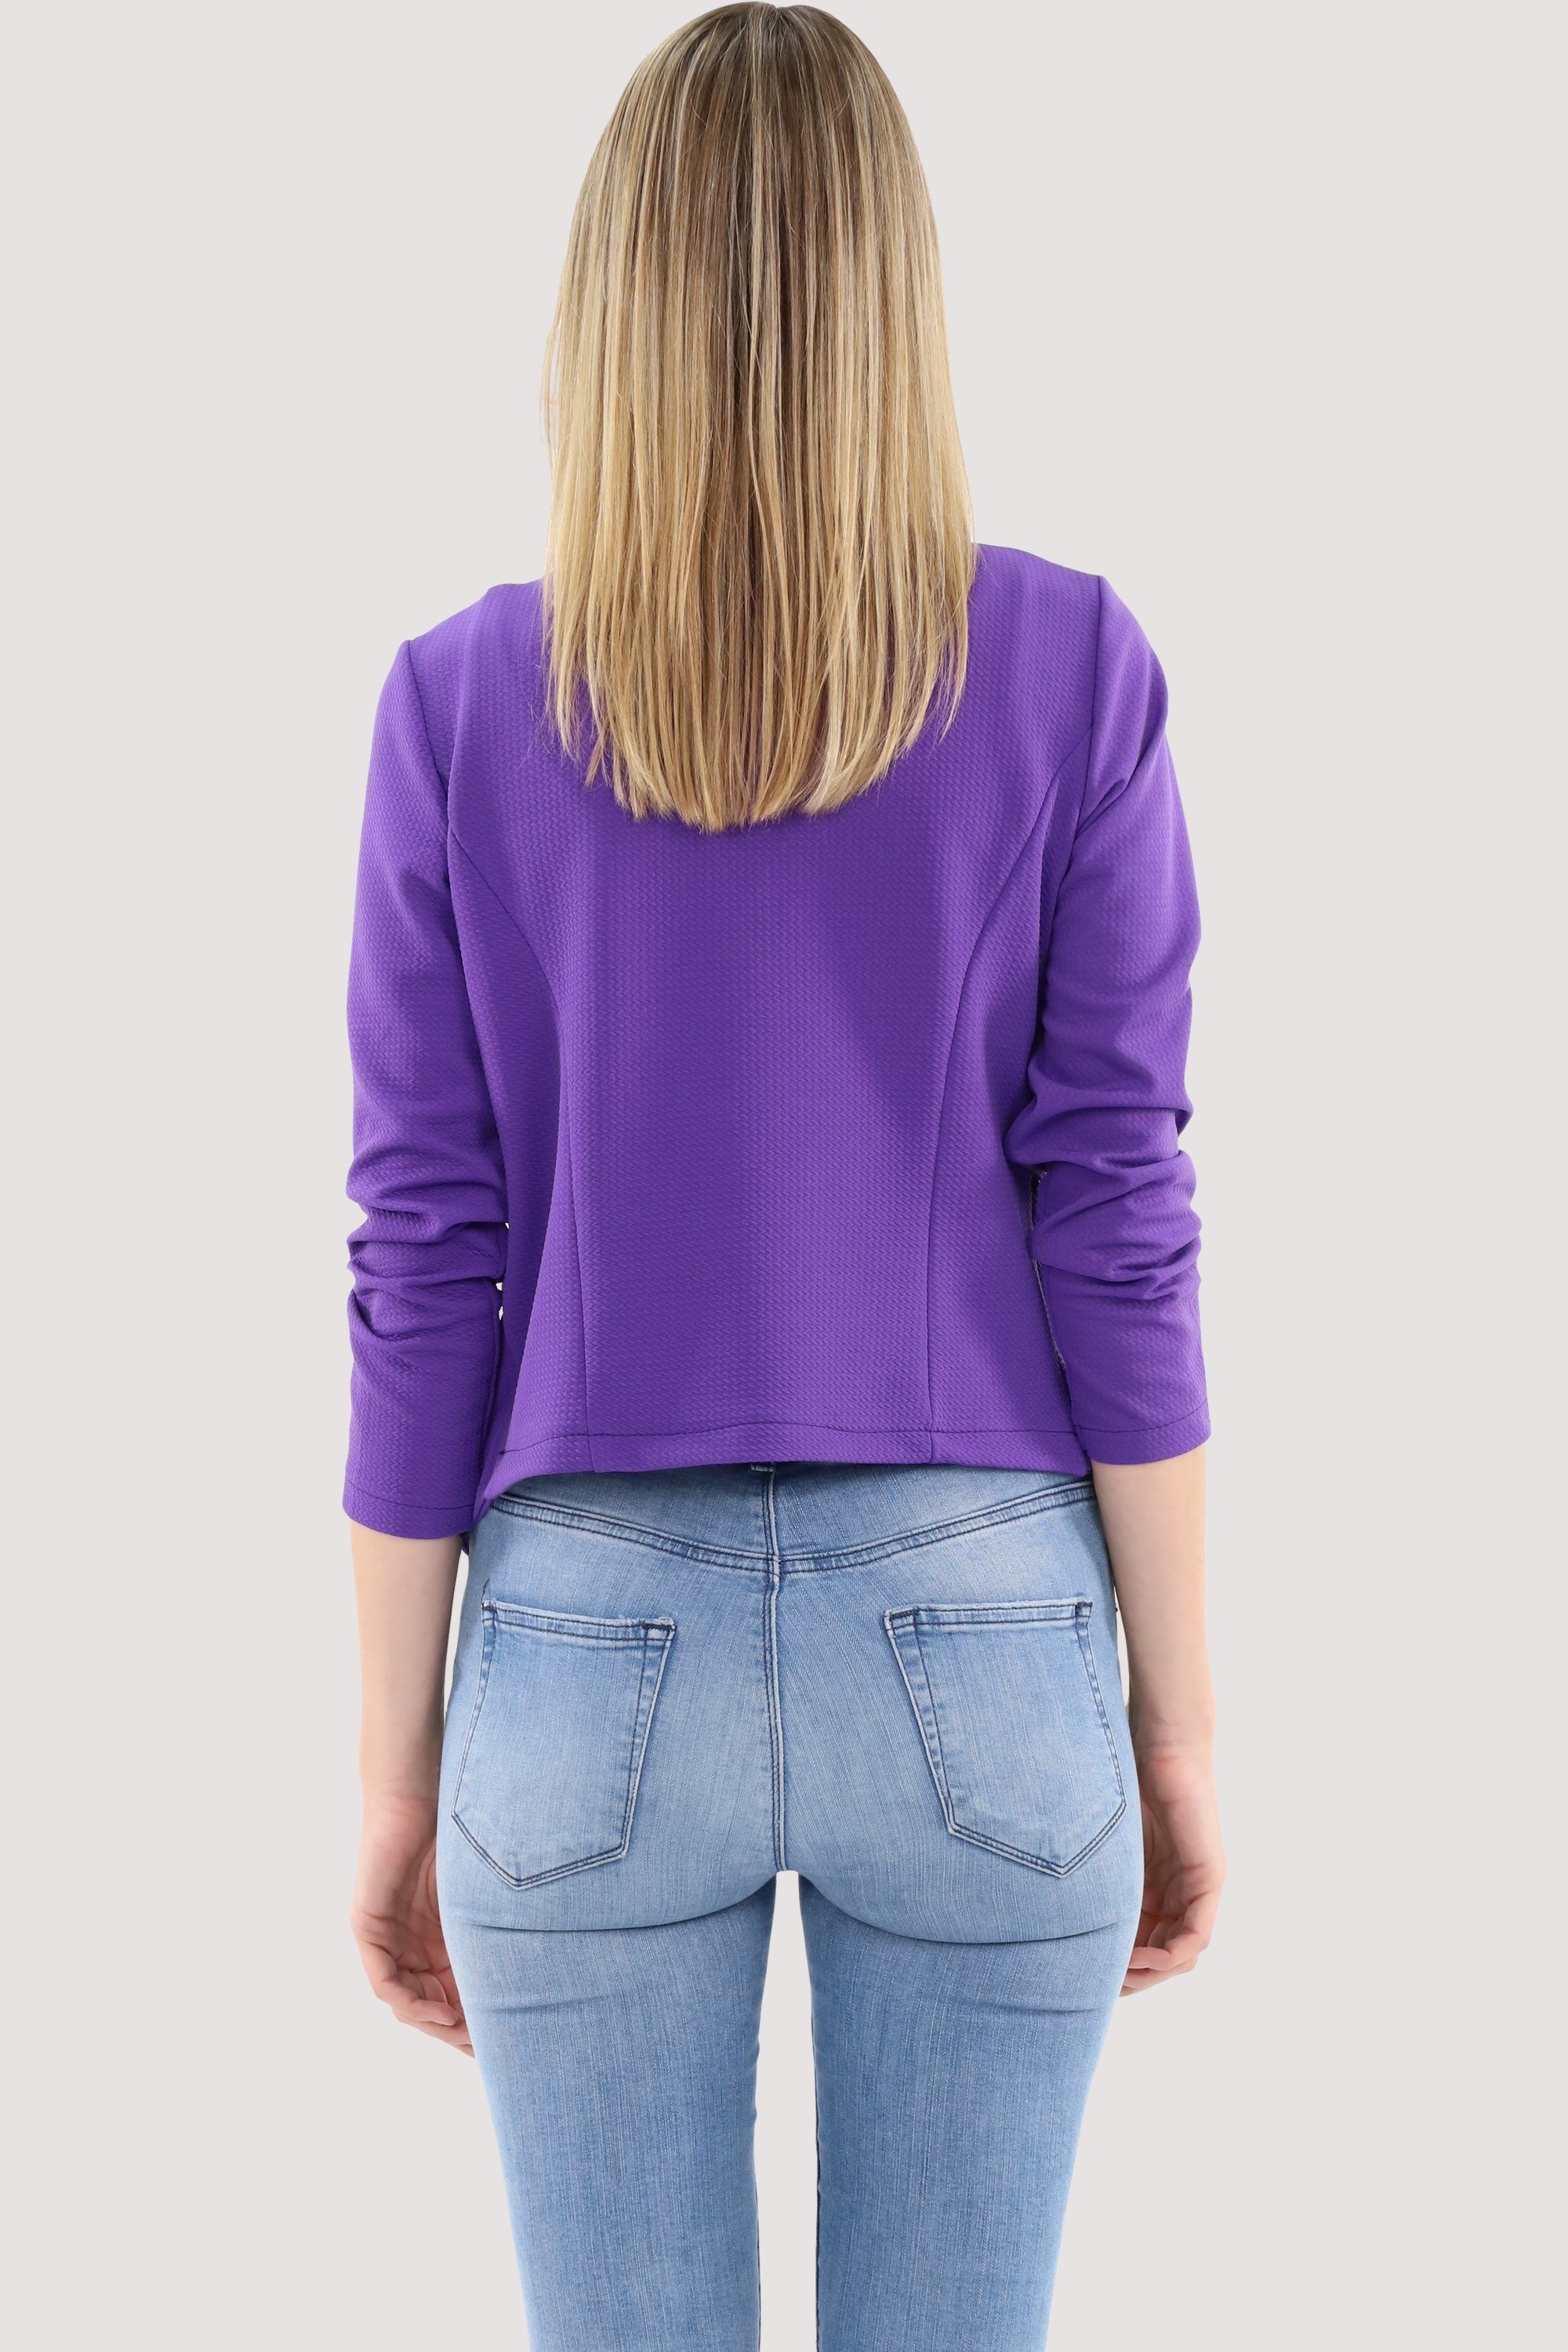 6040 im malito more Jackenblazer than Sweatblazer fashion violett Basic-Look